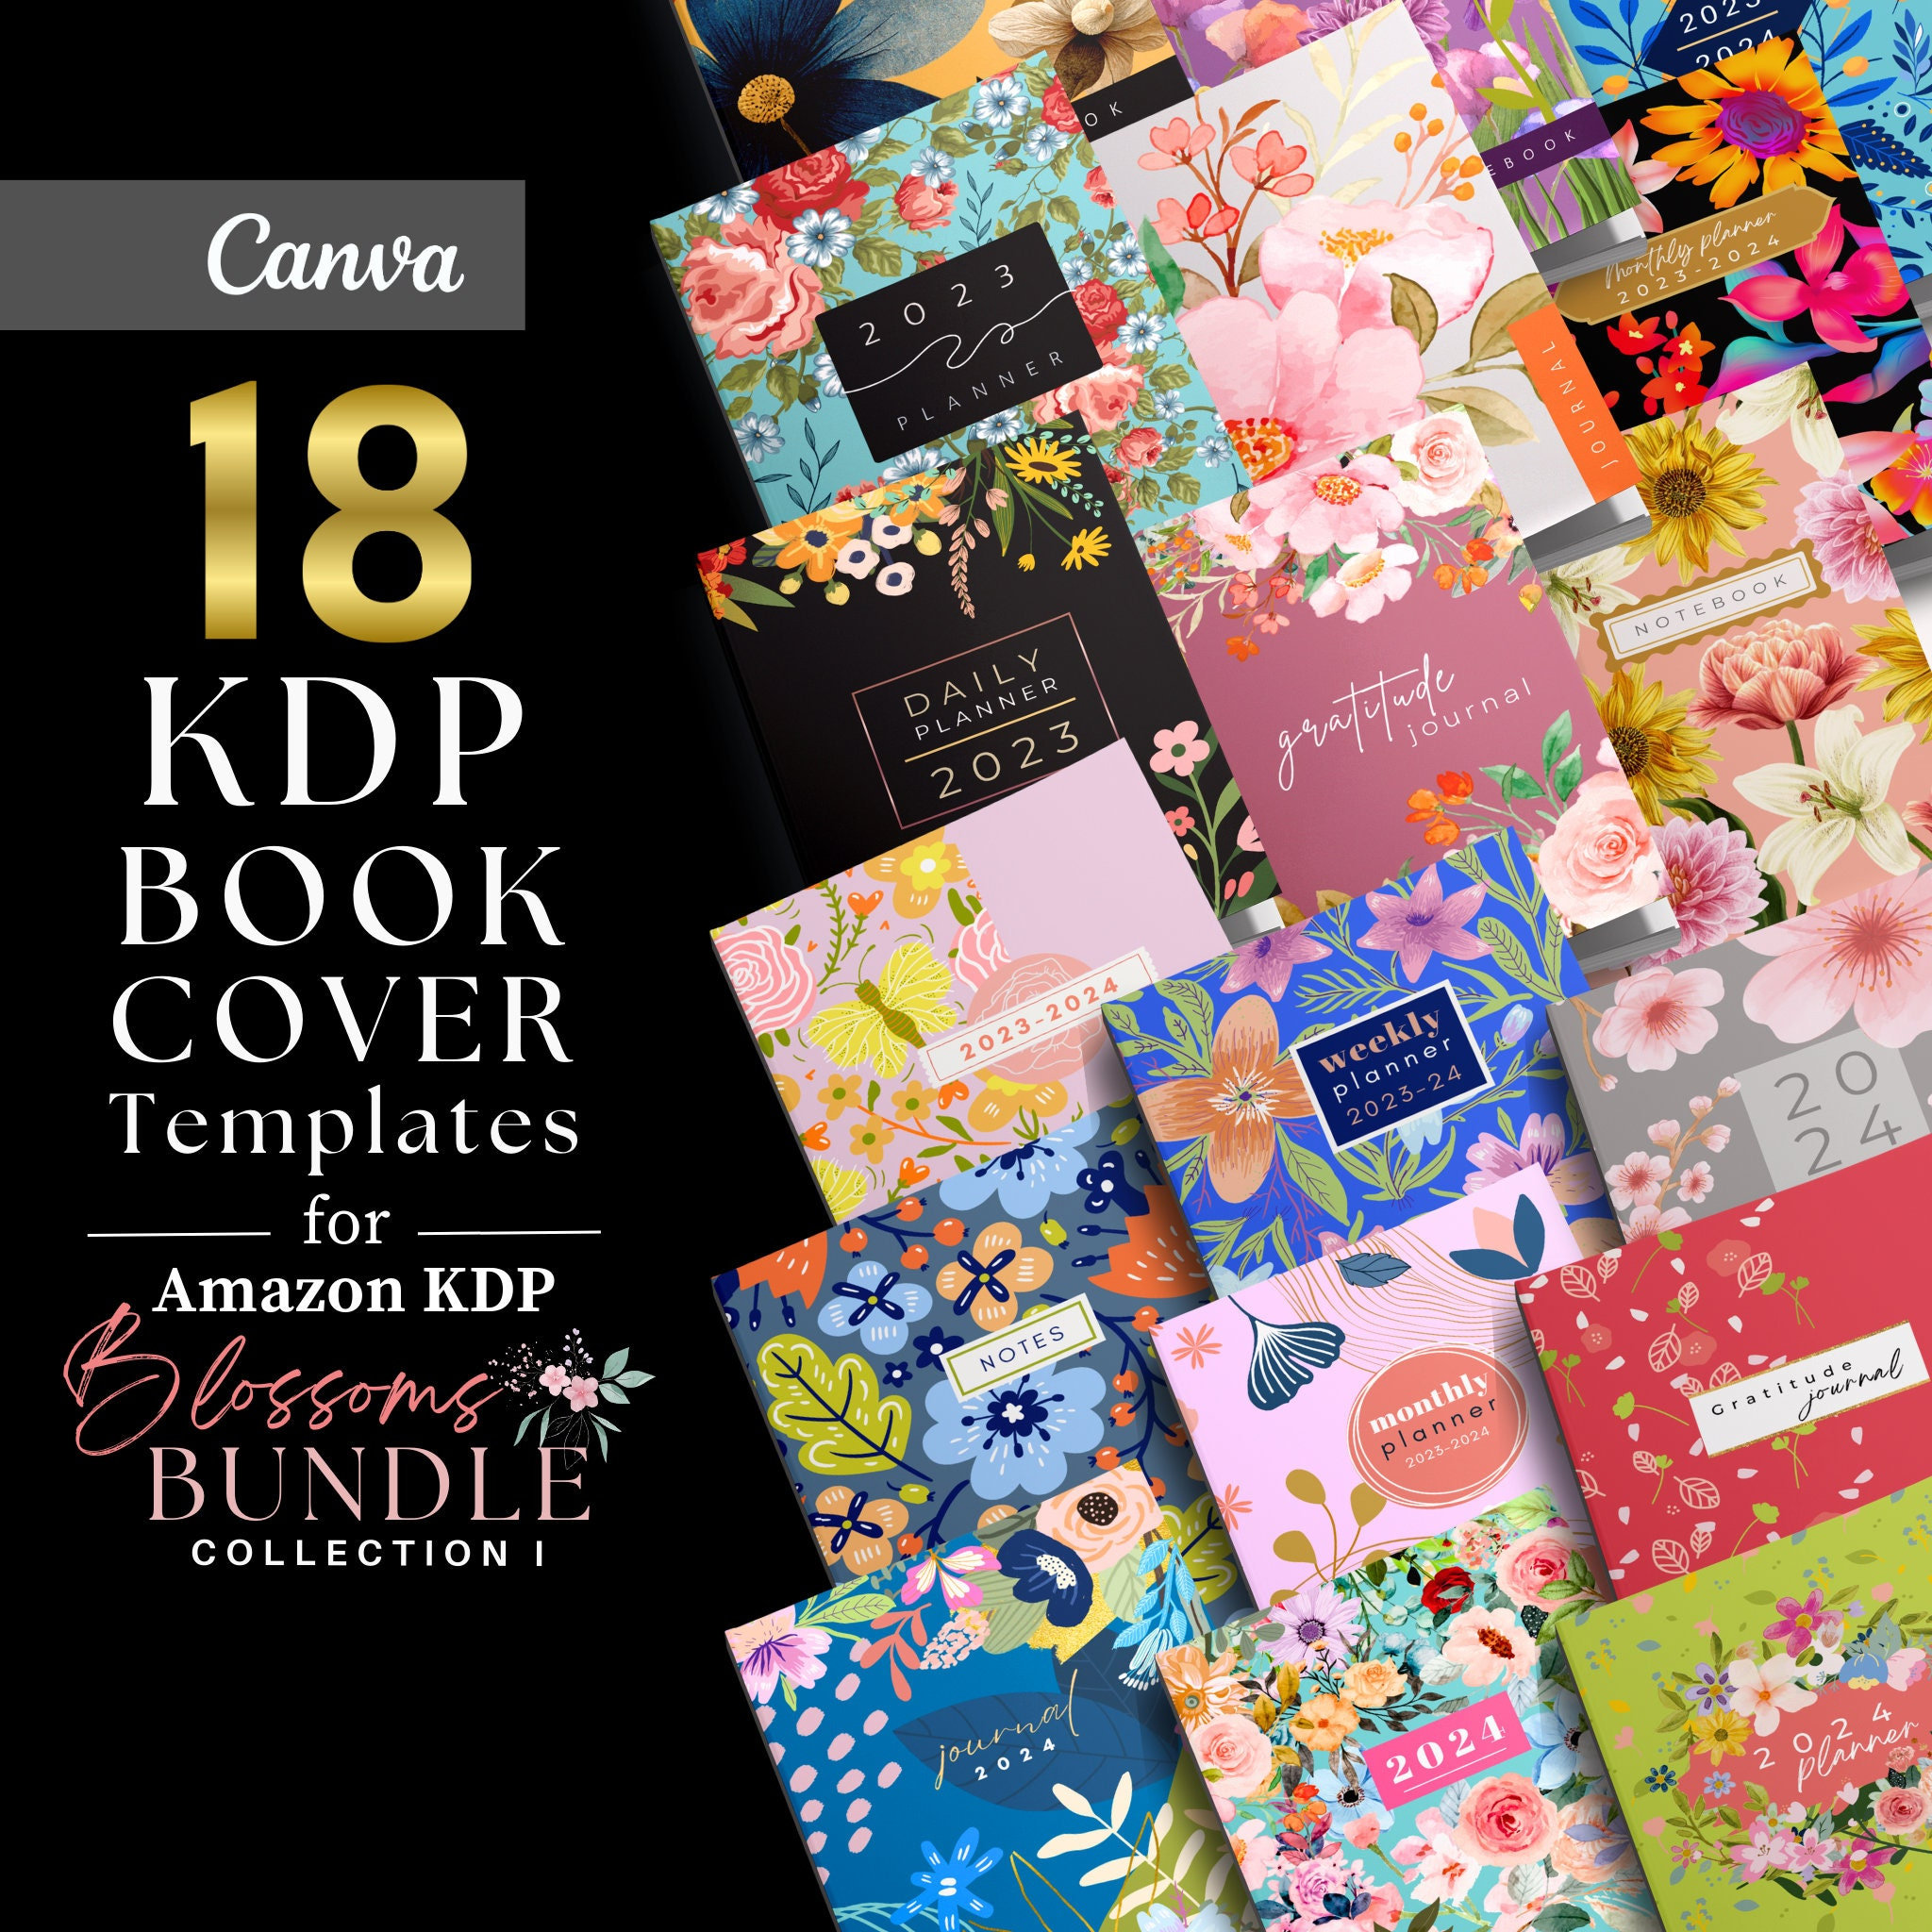 Sketchbook Printable Template KDP Interiors Editable, Printable PDF,  Editable Template, Printable Templates, Planner Inserts 